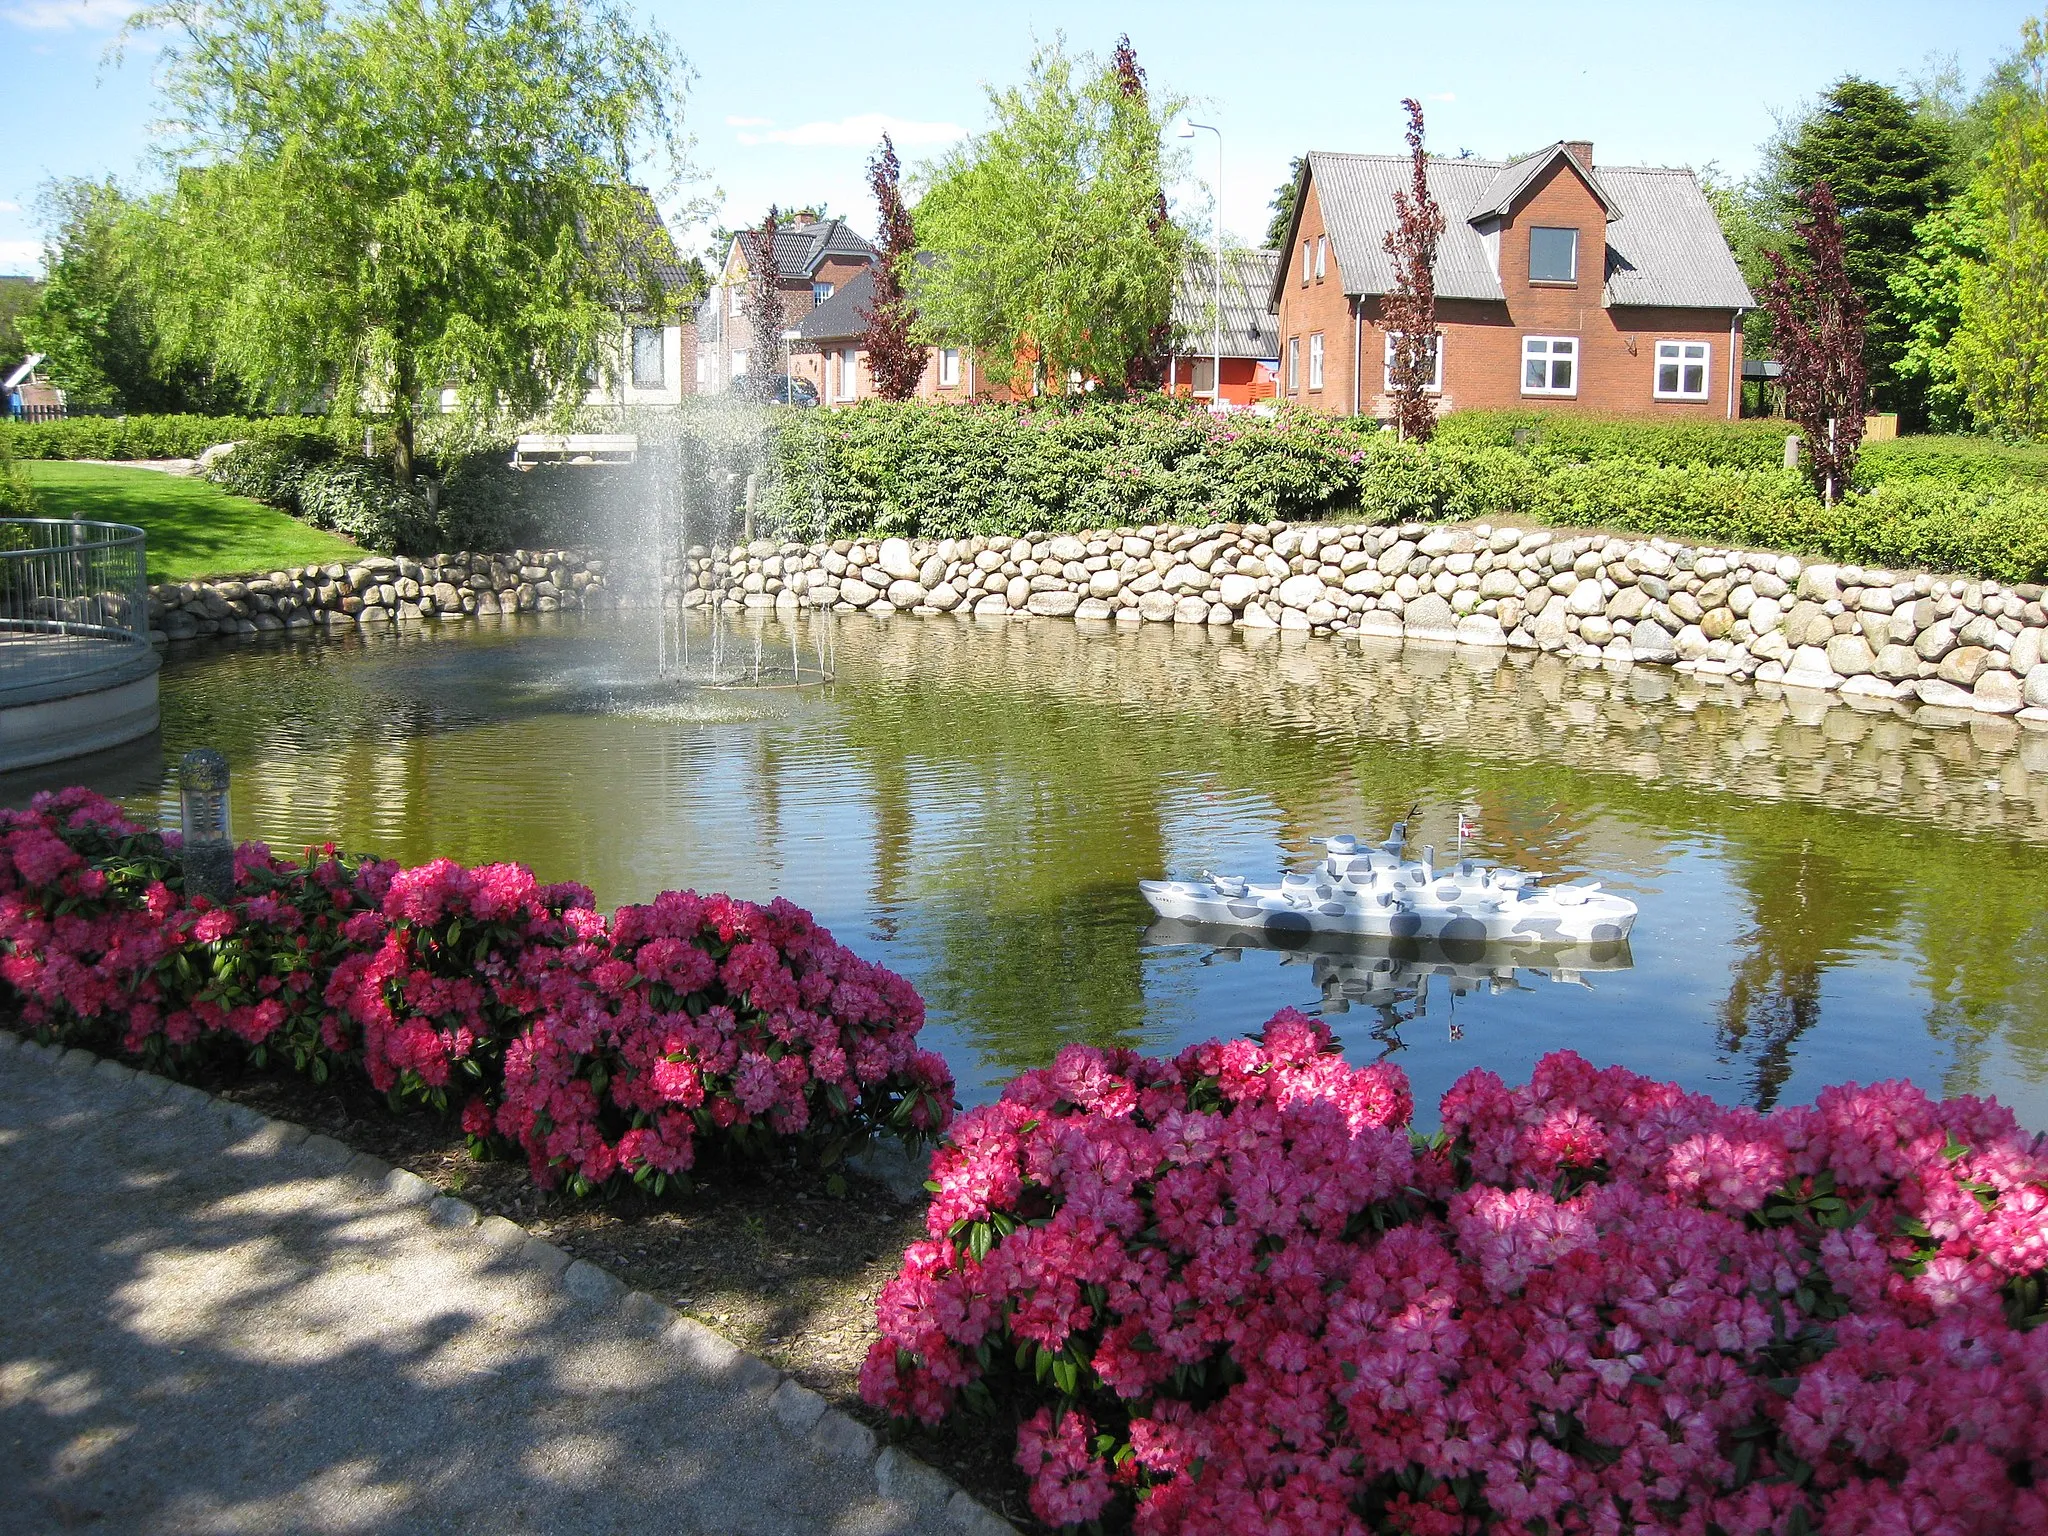 Photo showing: The village pond "Vorbasse Krigshavn" in the small town "Vorbasse". The town is located in Billund Kommune, South-Central Jutland, Denmark. ("Krigshavn" means "Naval Port").